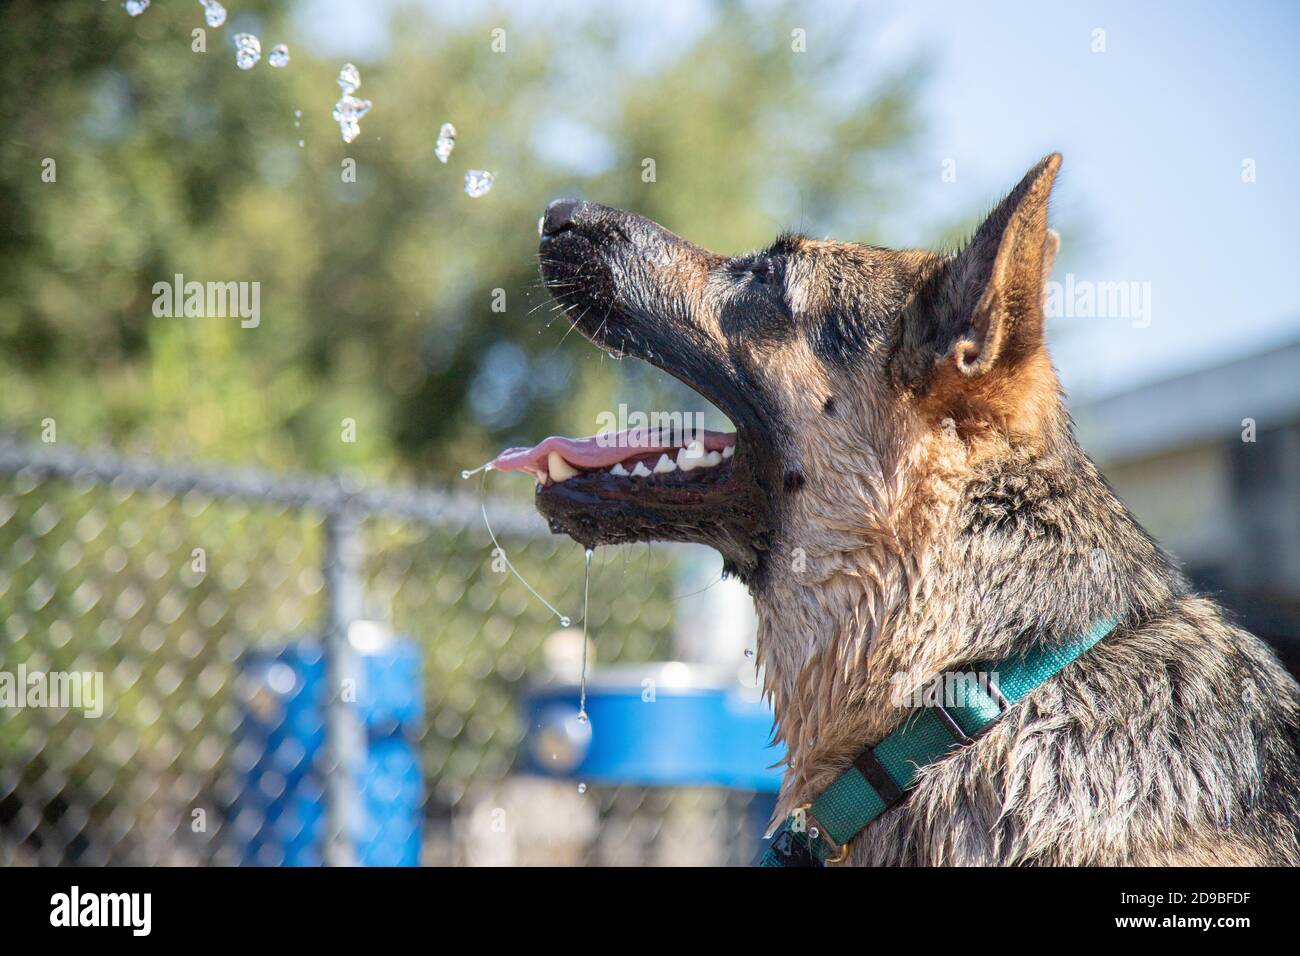 German shepherd dog drinking water in a garden, Florida, USA Stock Photo